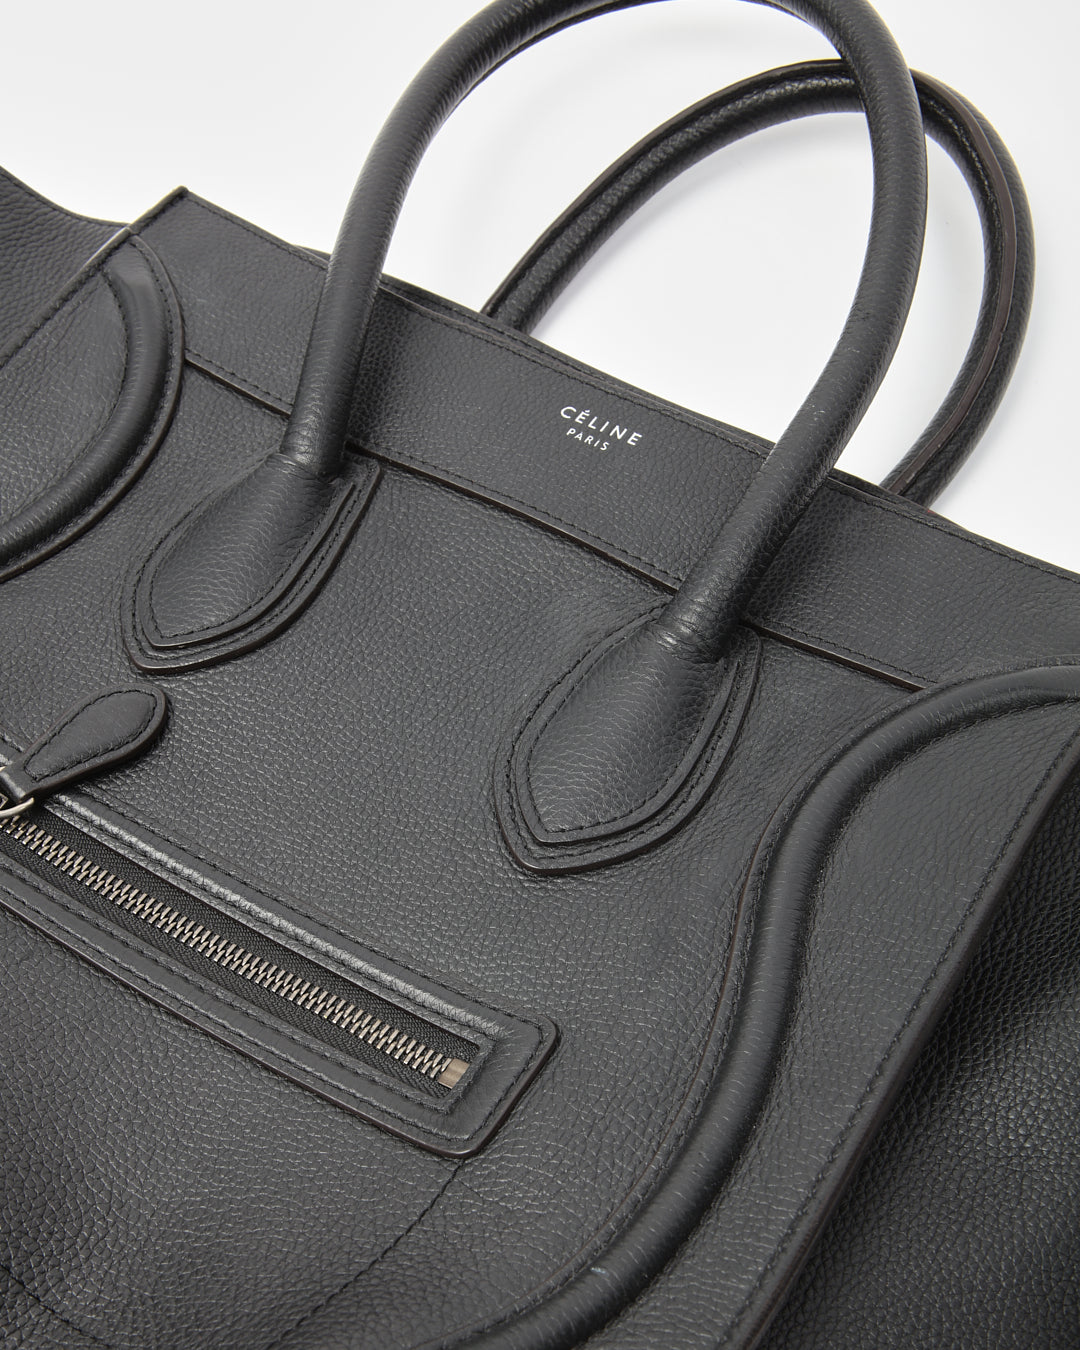 Celine Black Leather Micro Luggage Tote Bag